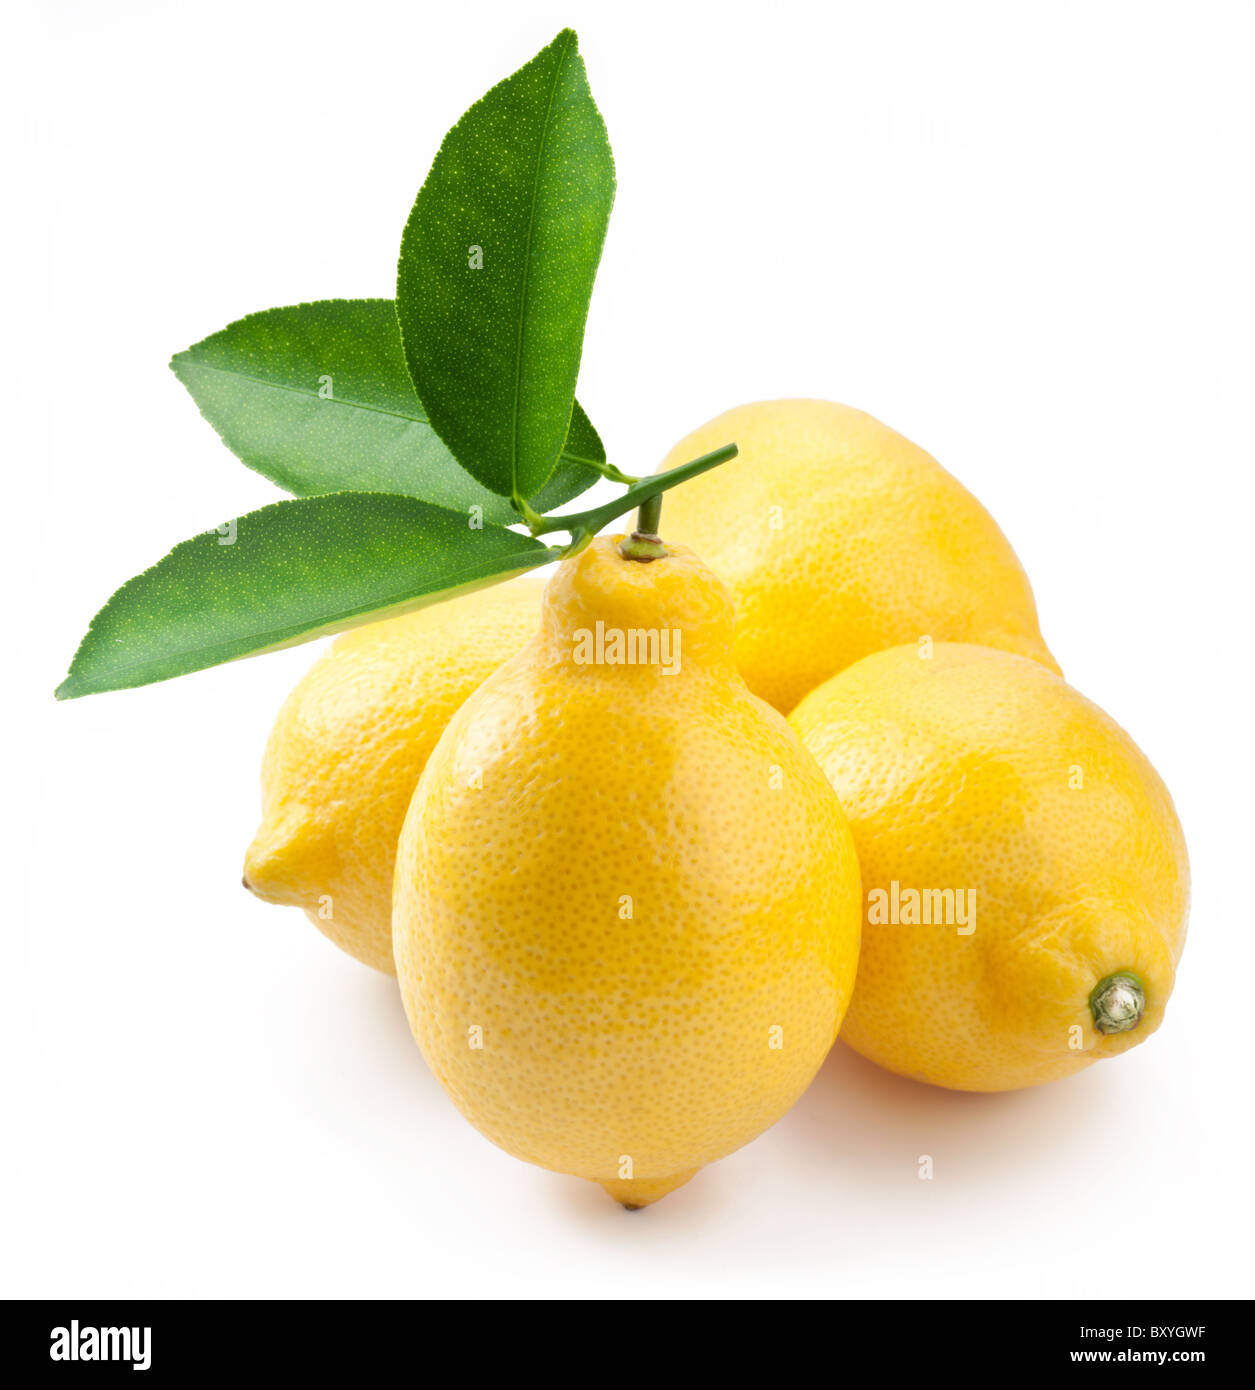 High-quality photo ripe lemons on a white background Stock Photo